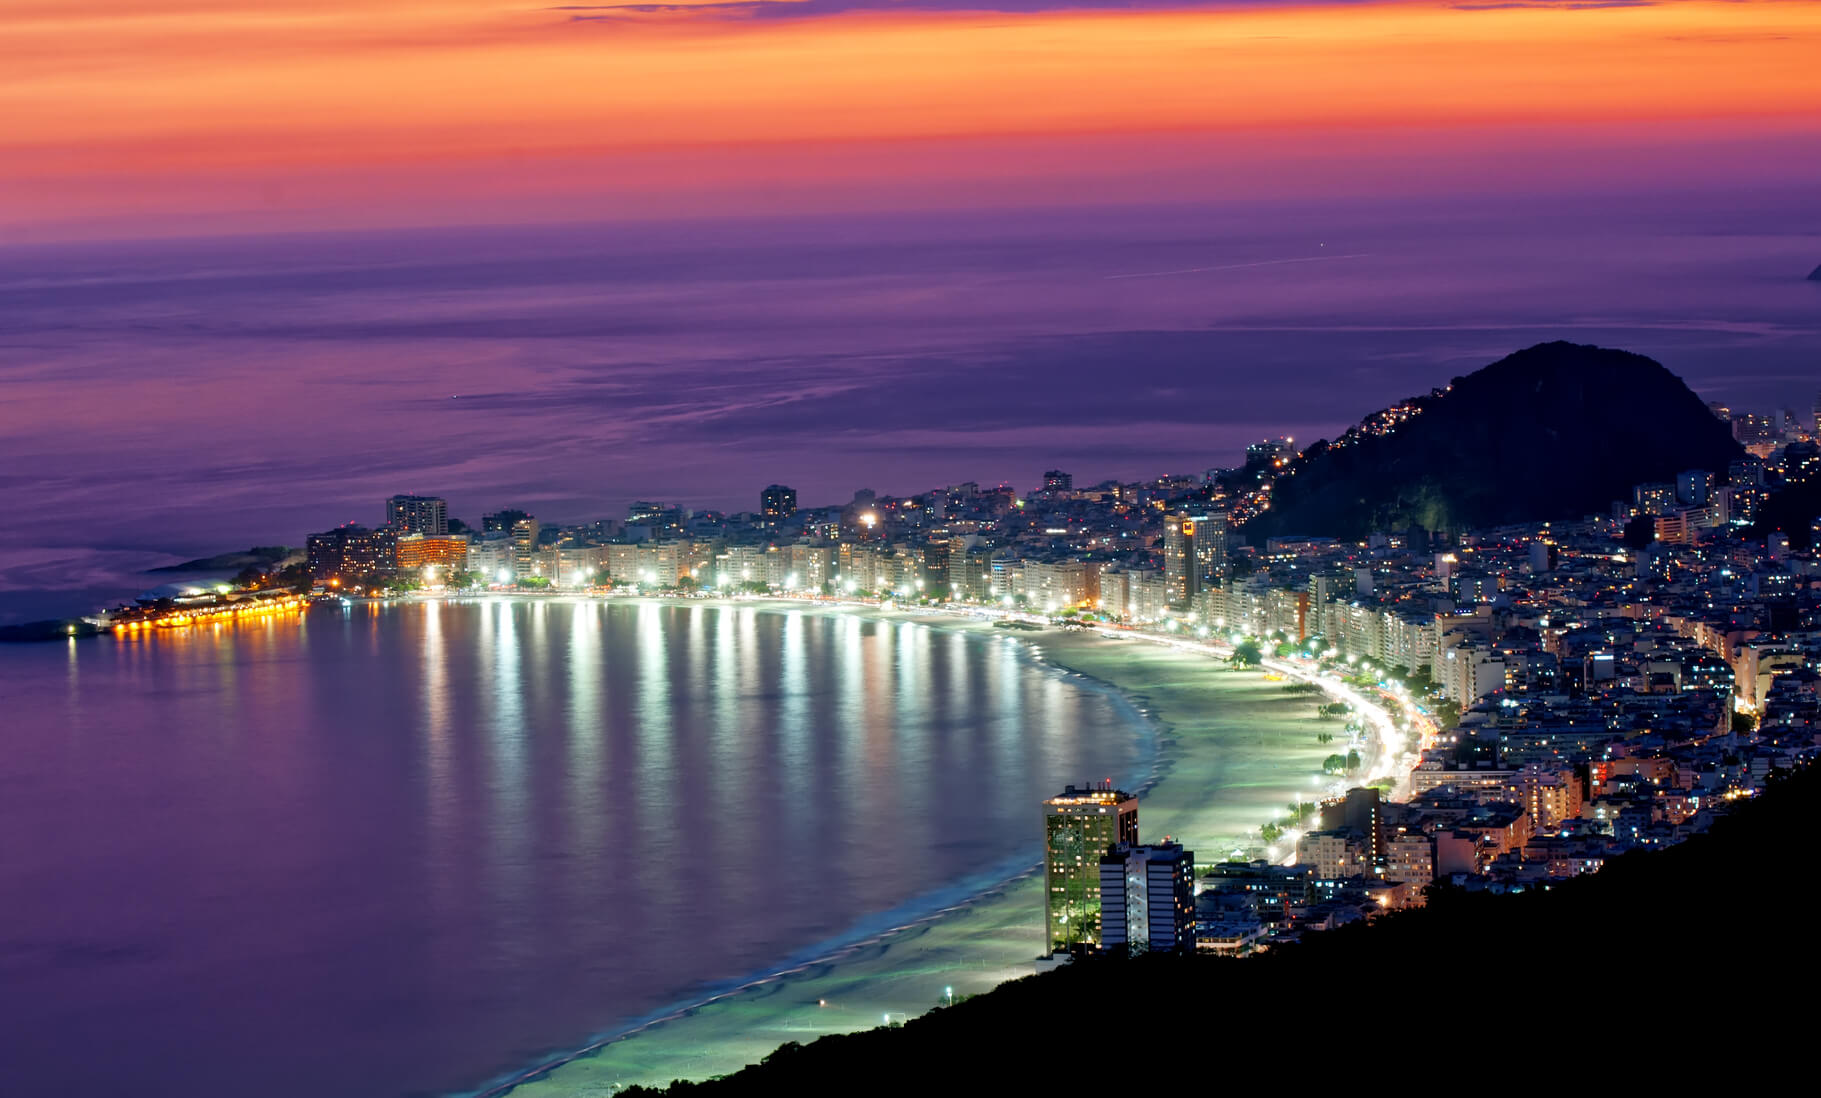 Flight deals from Las Vegas to Rio De Janeiro, Brazil | Secret Flying